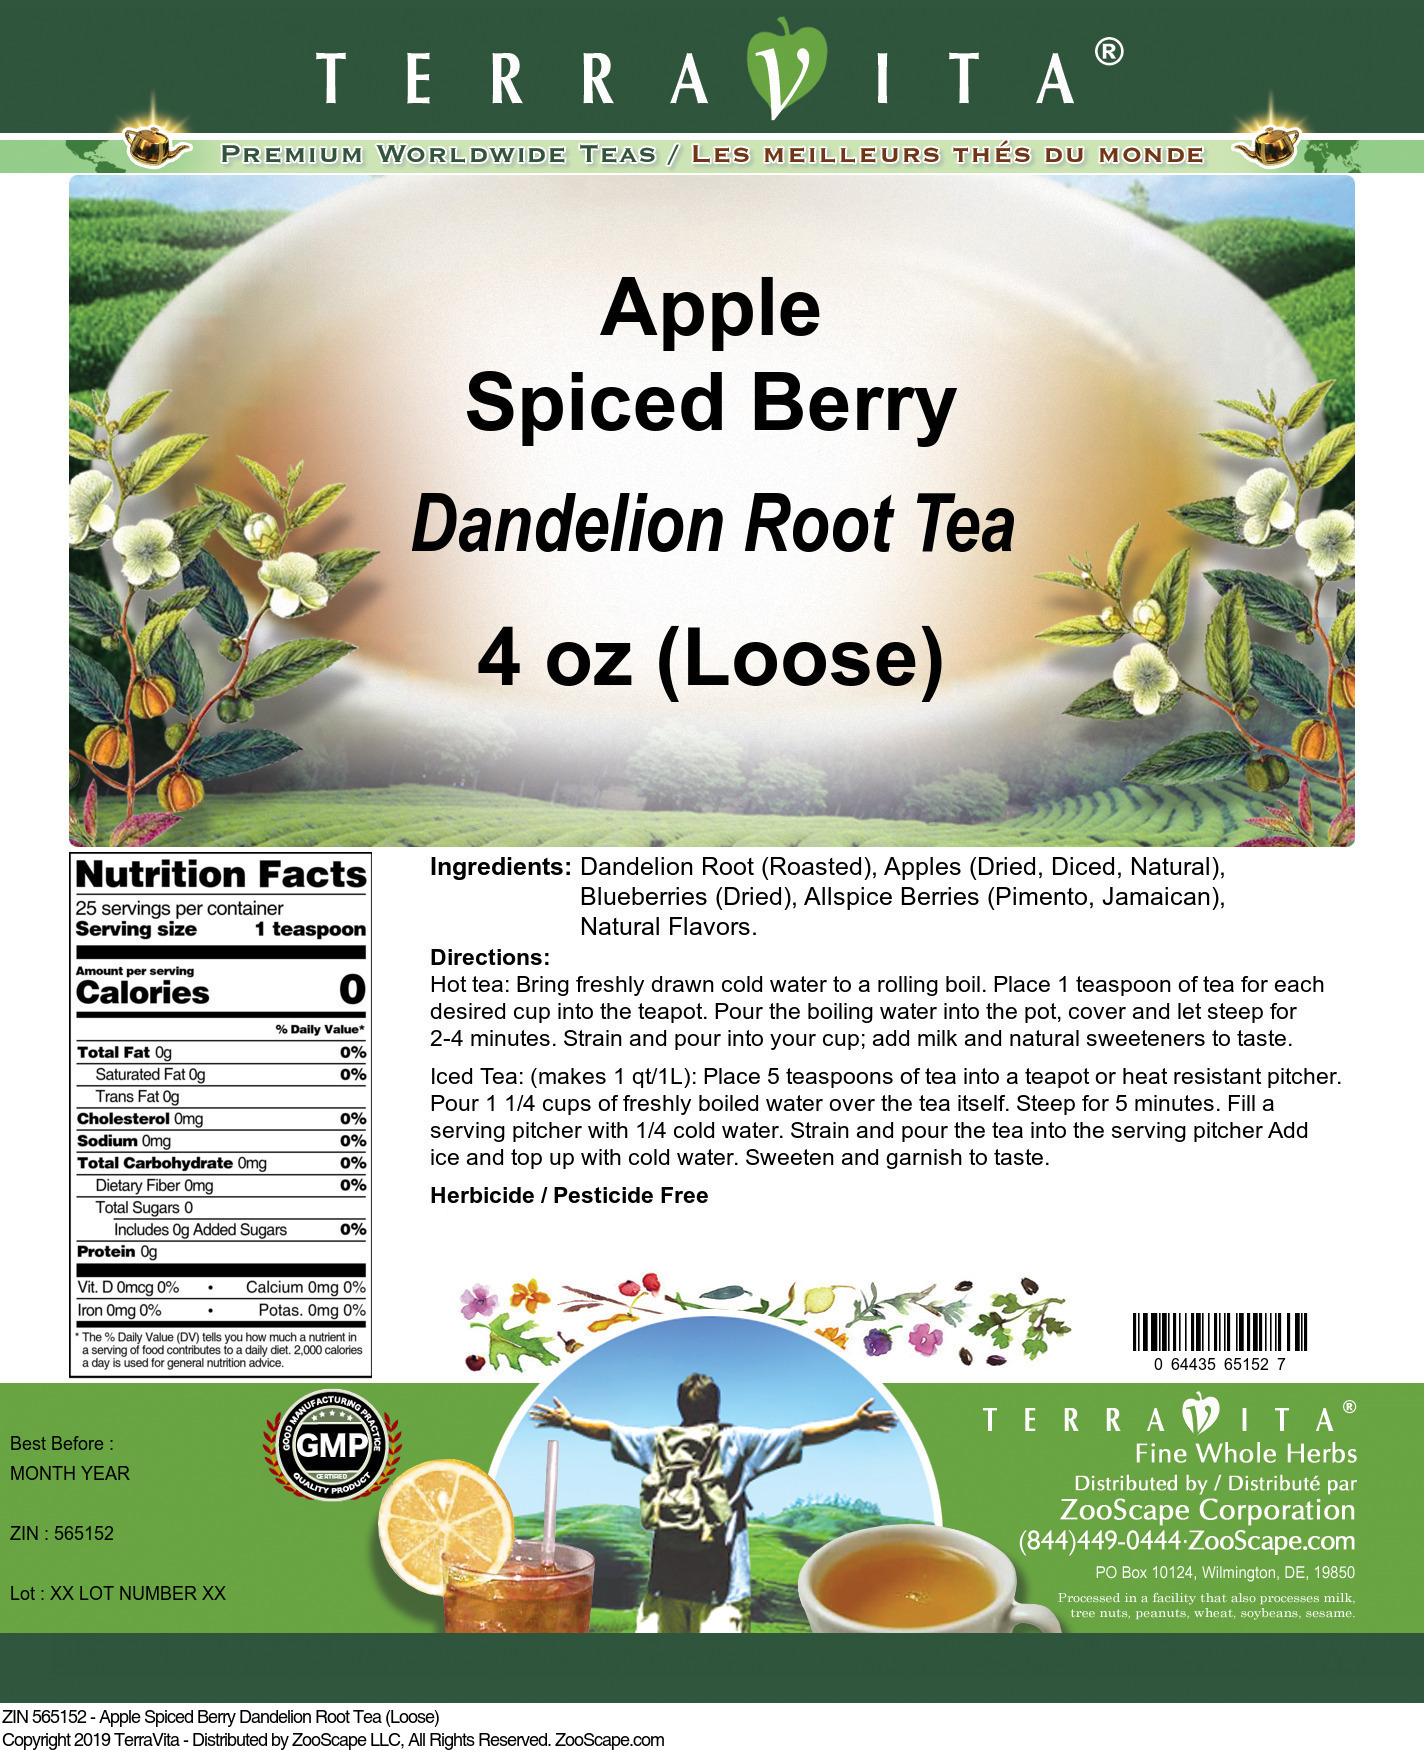 Apple Spiced Berry Dandelion Root Tea (Loose) - Label